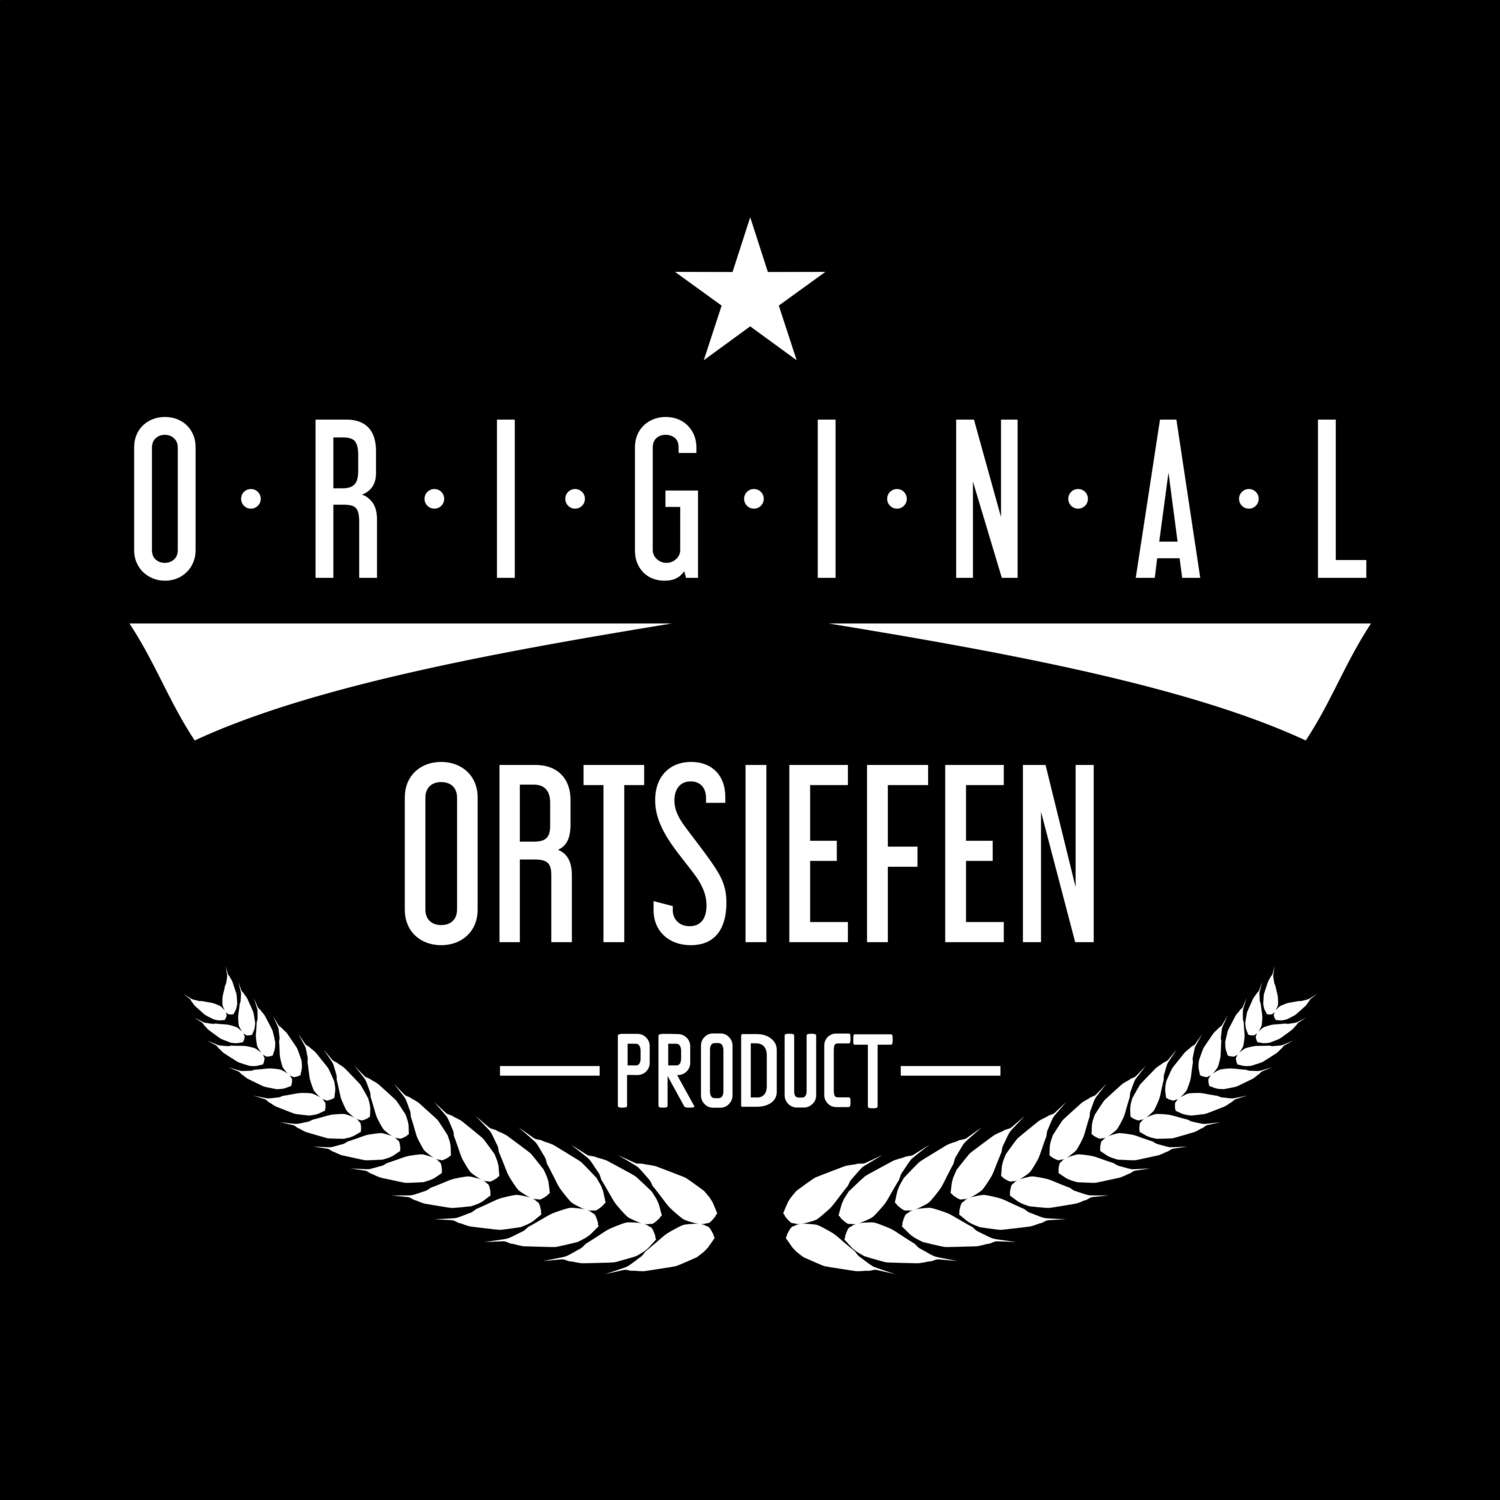 Ortsiefen T-Shirt »Original Product«